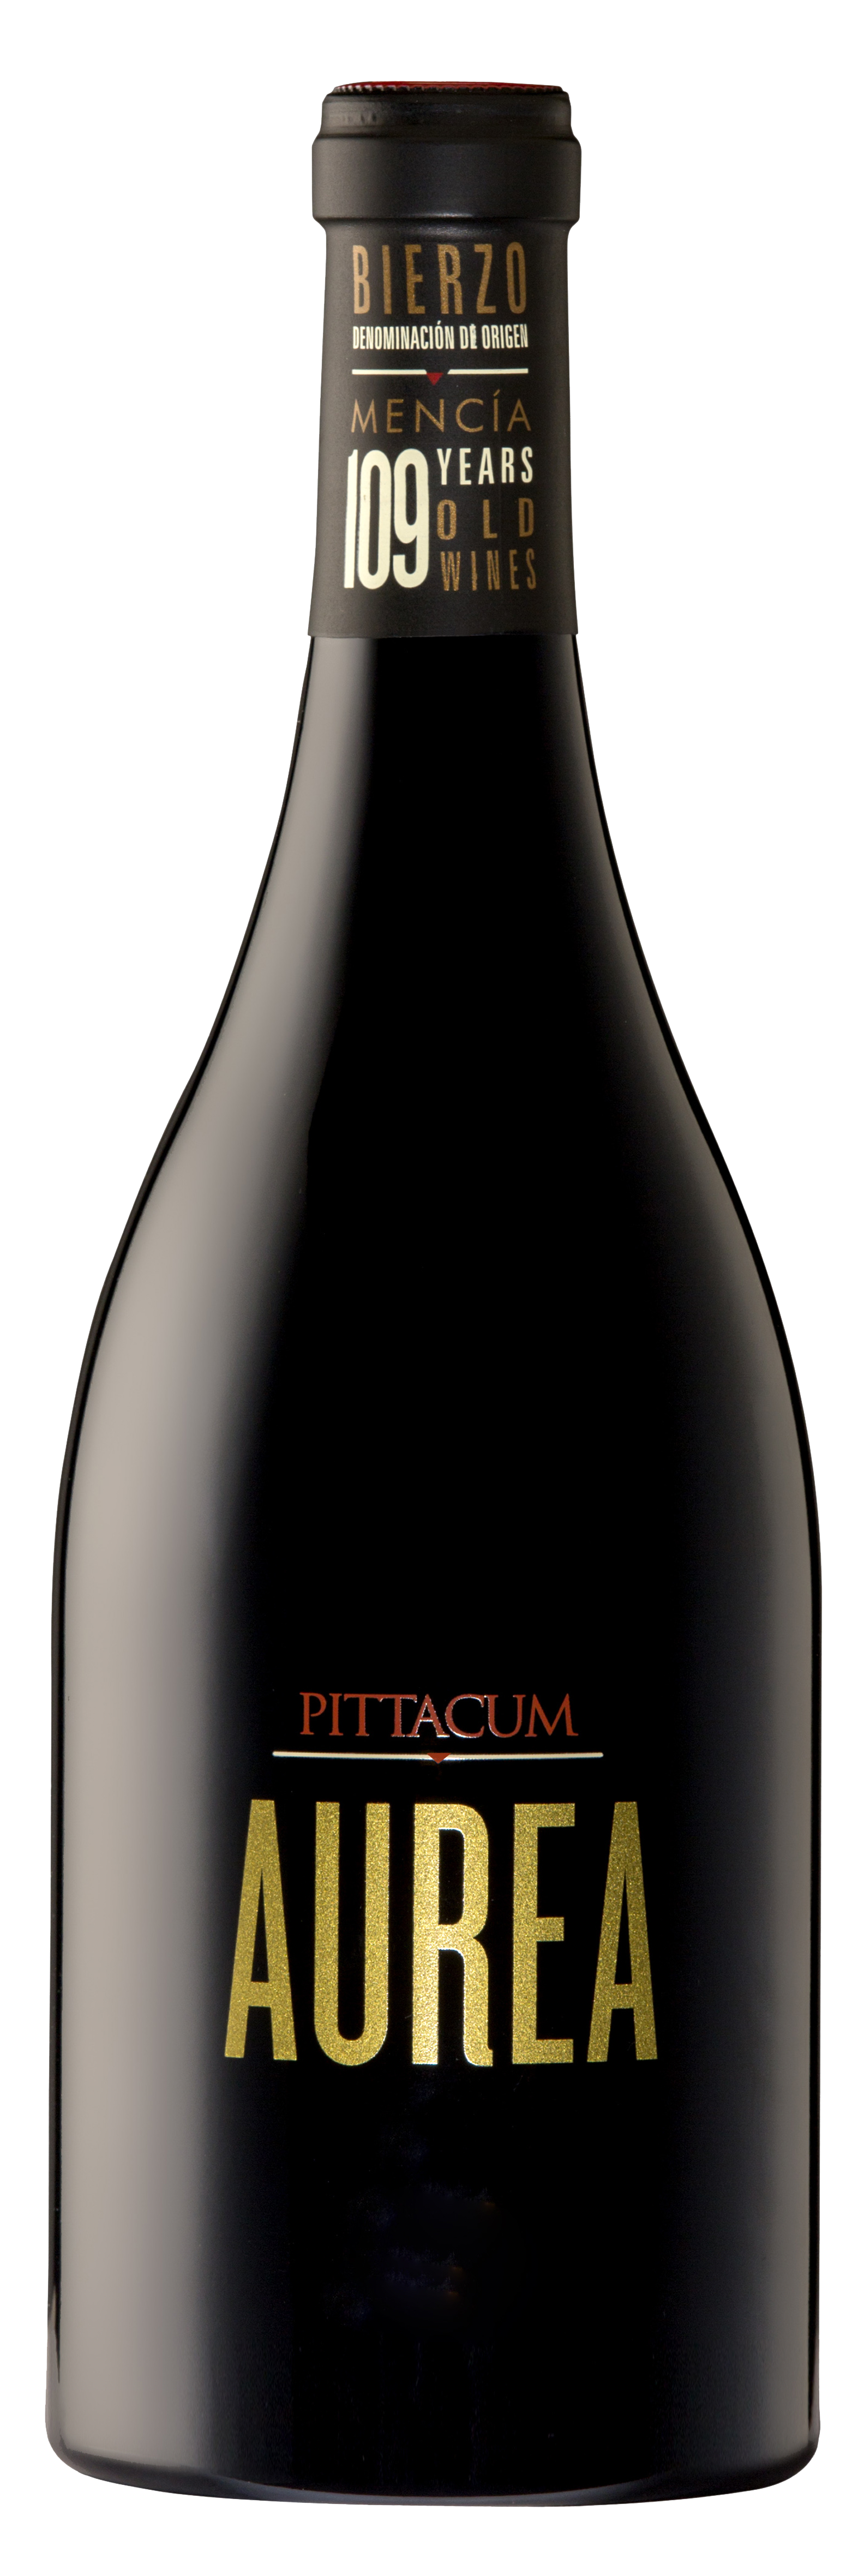 Pittacum, Aurea - 2015 - 0,75 ltr.